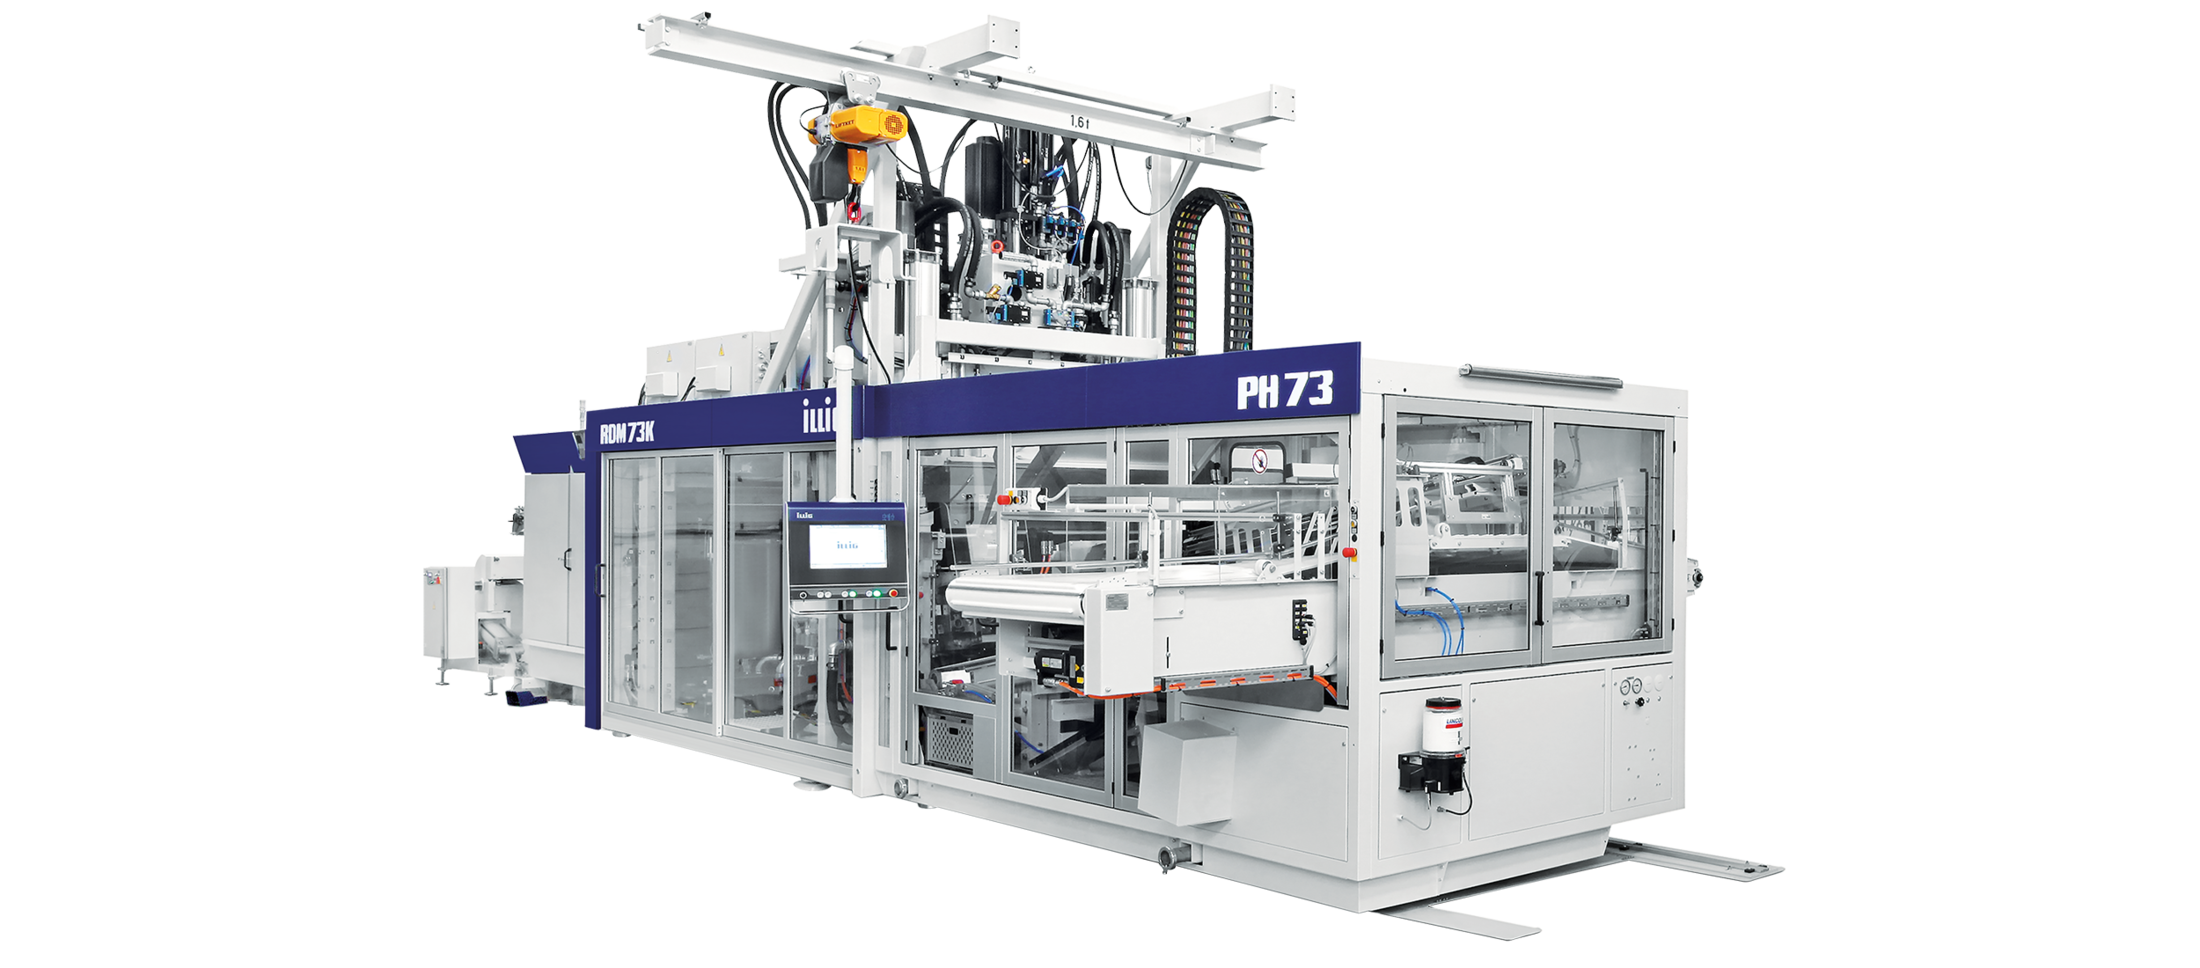 ILLIG IC-RDM 73K Rollenformautomat für Form-/ Stanzbetrieb | © ILLIG Maschinenbau